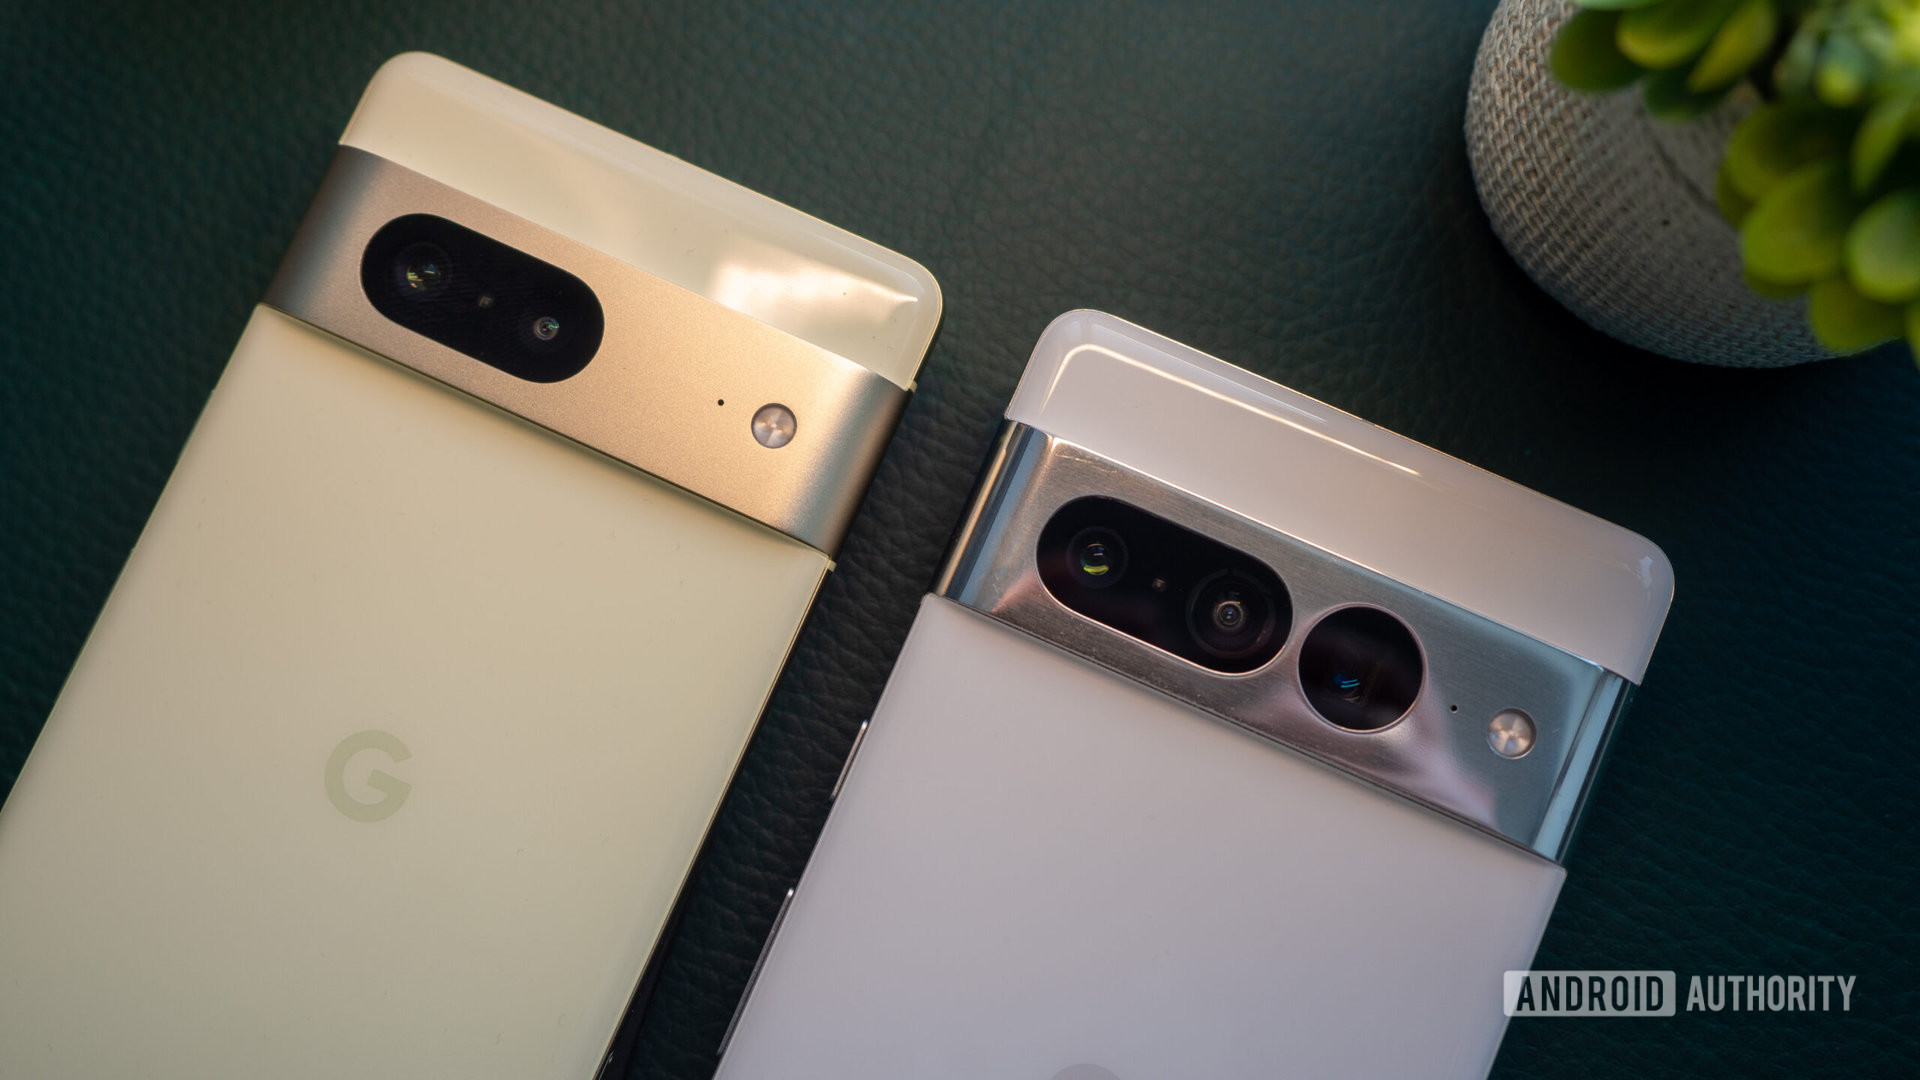 Google Pixel 7 Pro snow white next to Google Pixel 7 lemongrass green